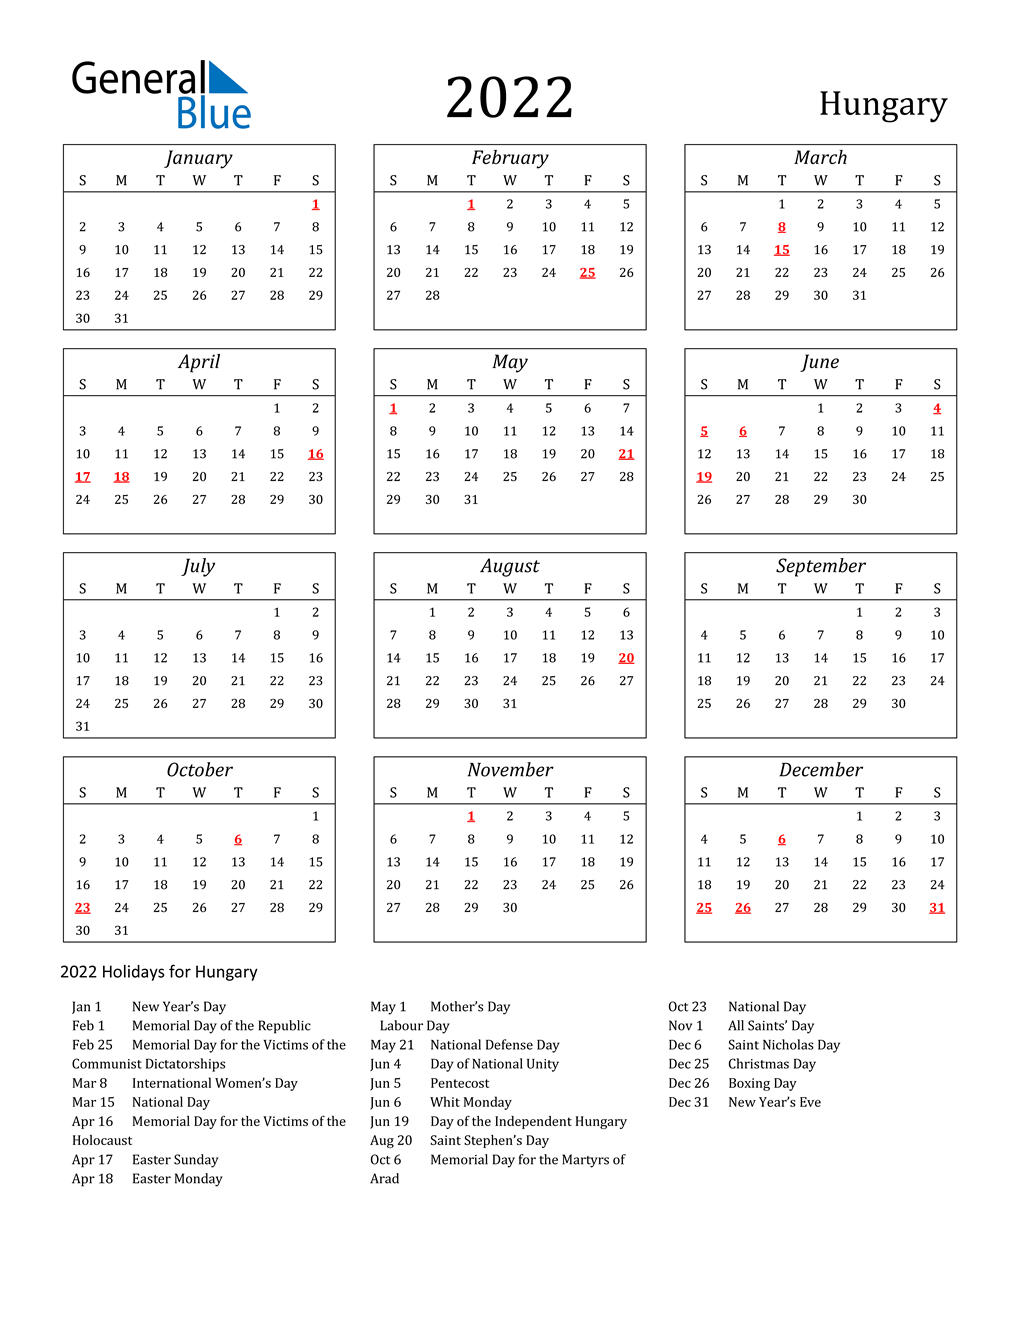 2022 Hungary Holiday Calendar